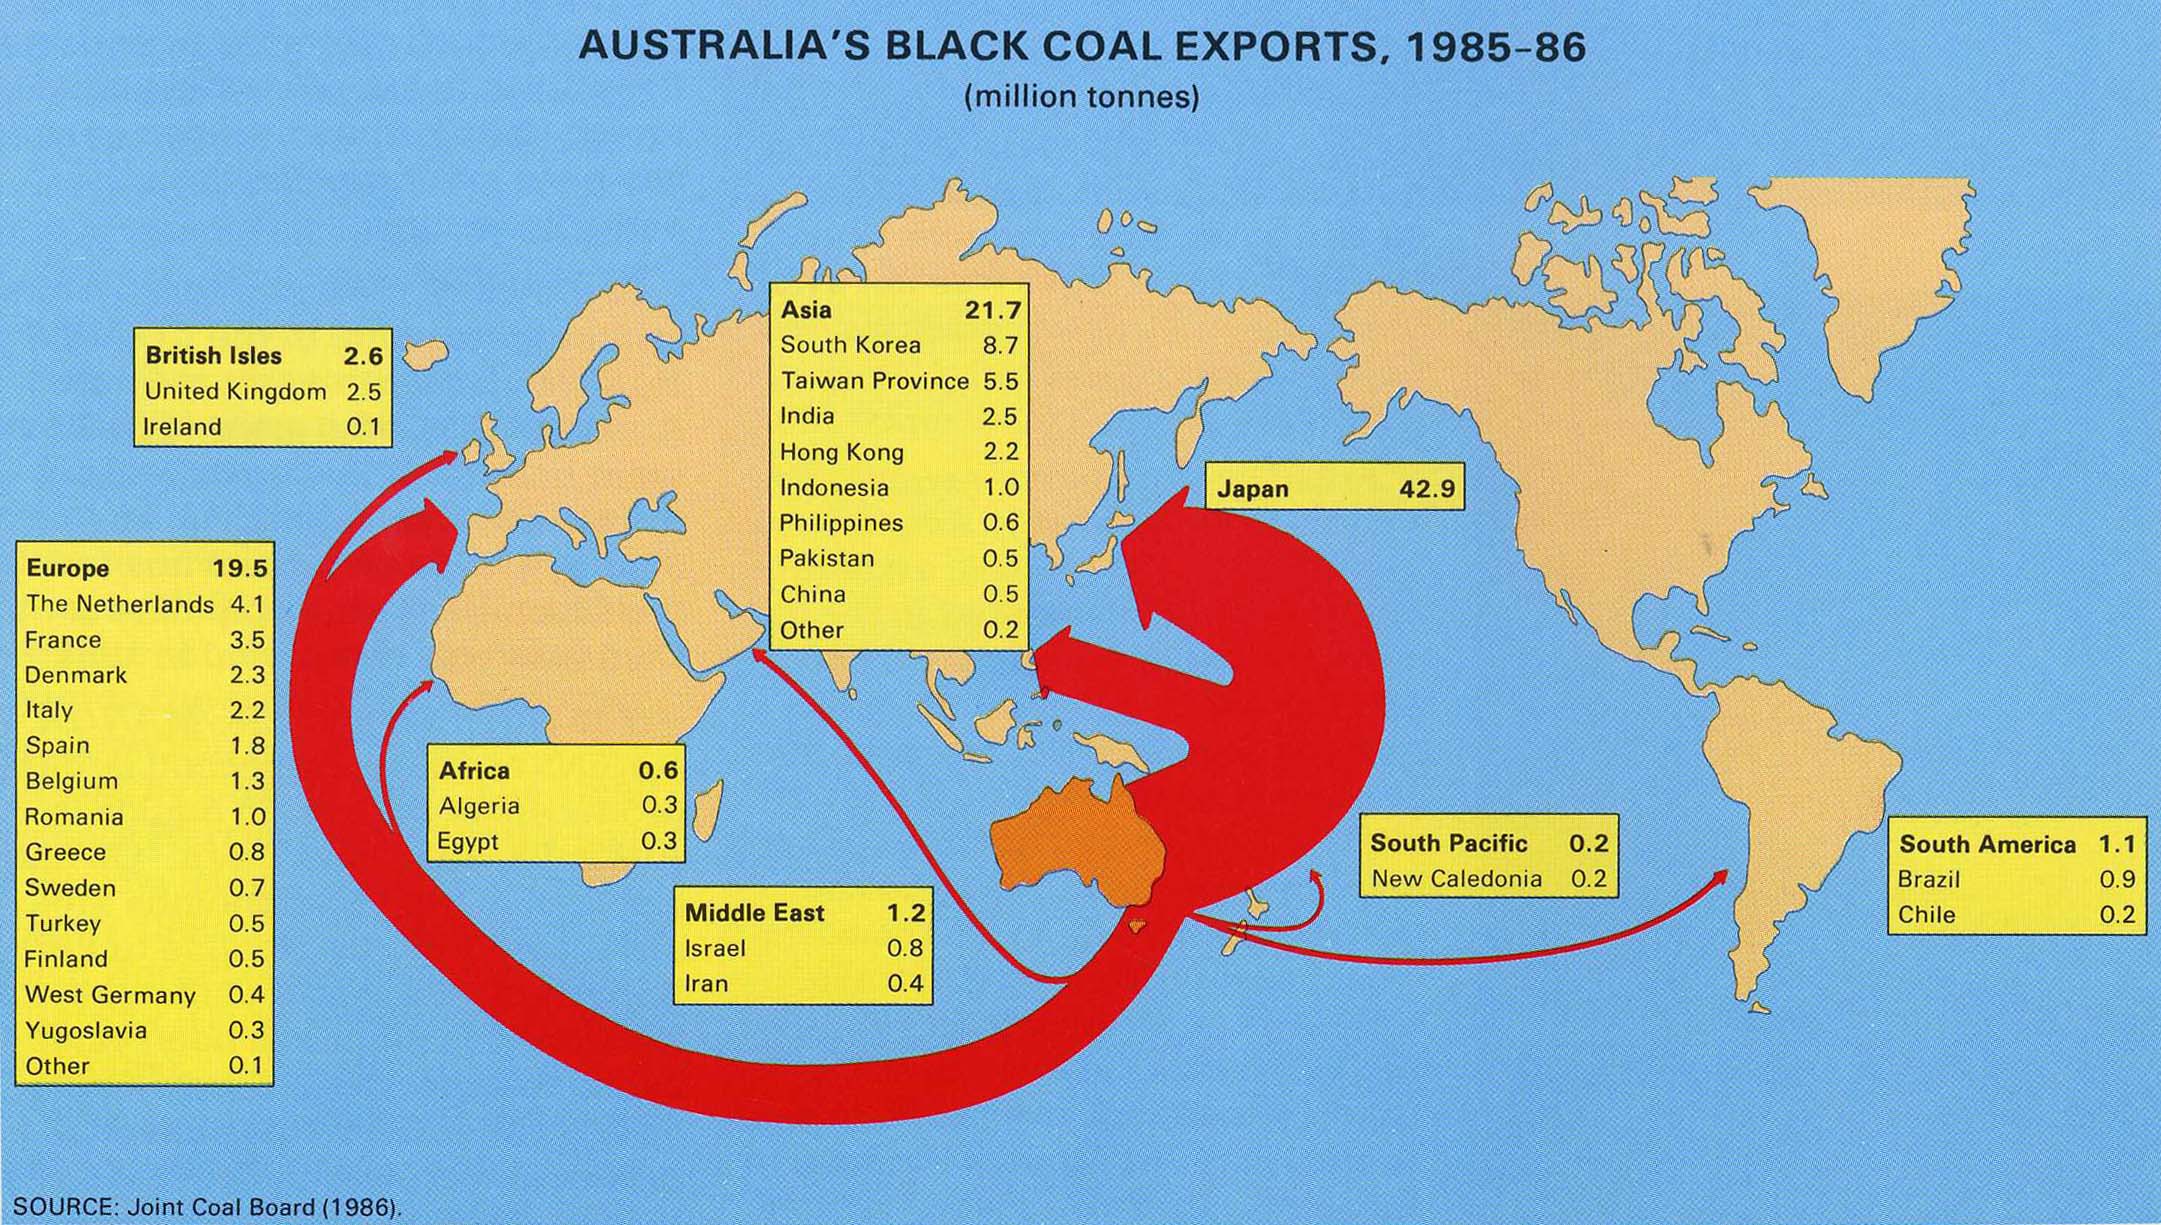 Stylised thematic map of Austalia's black coal exports, 1985-1986